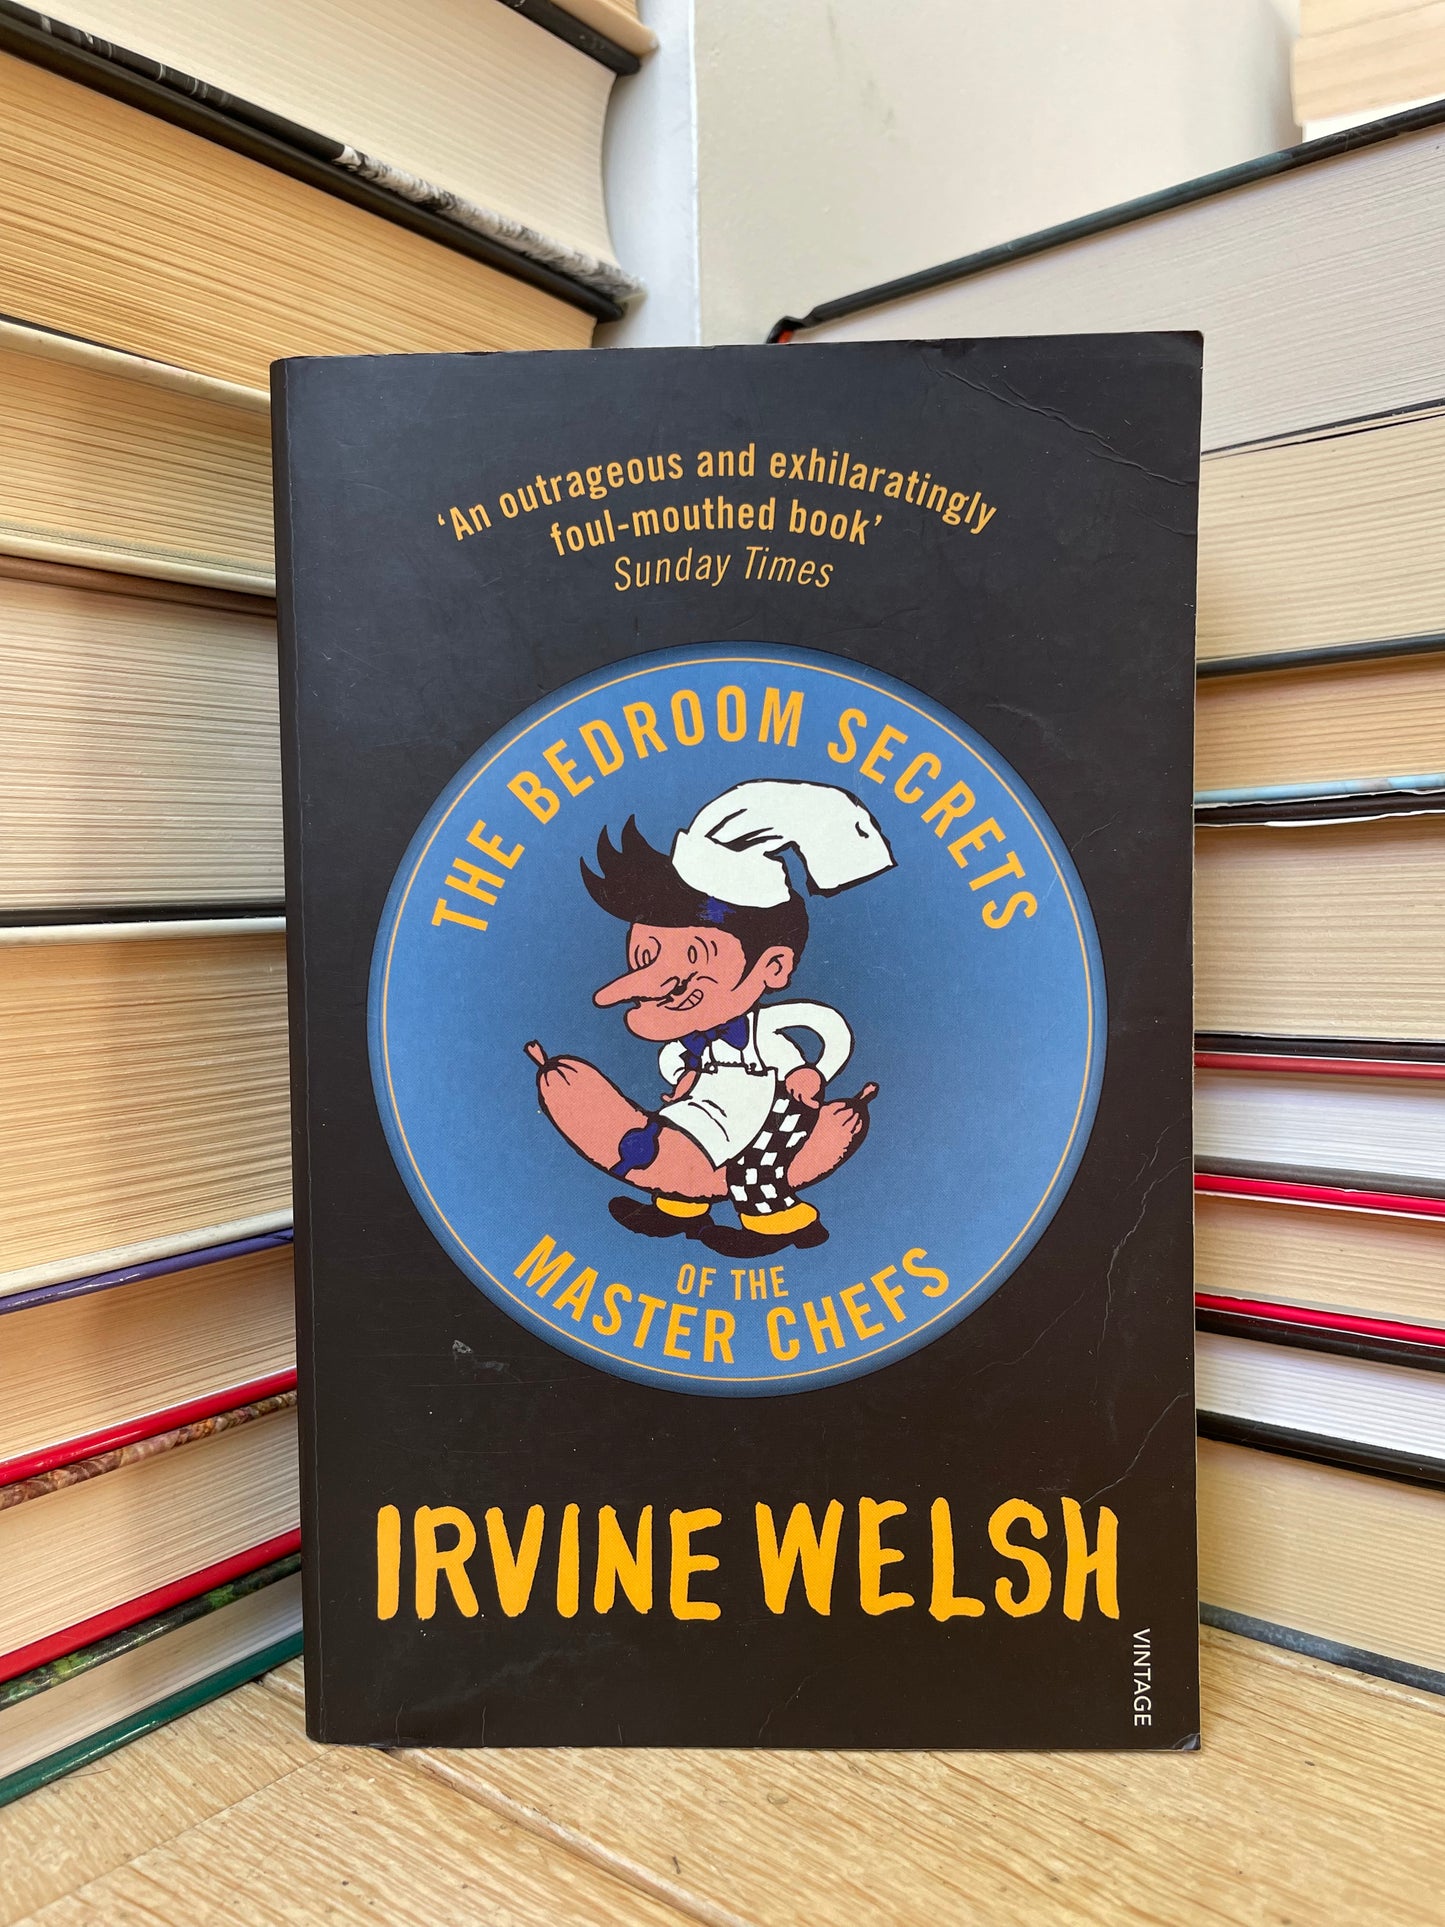 Irvine Welsh - The Bedroom Secrets of the Master Chefs